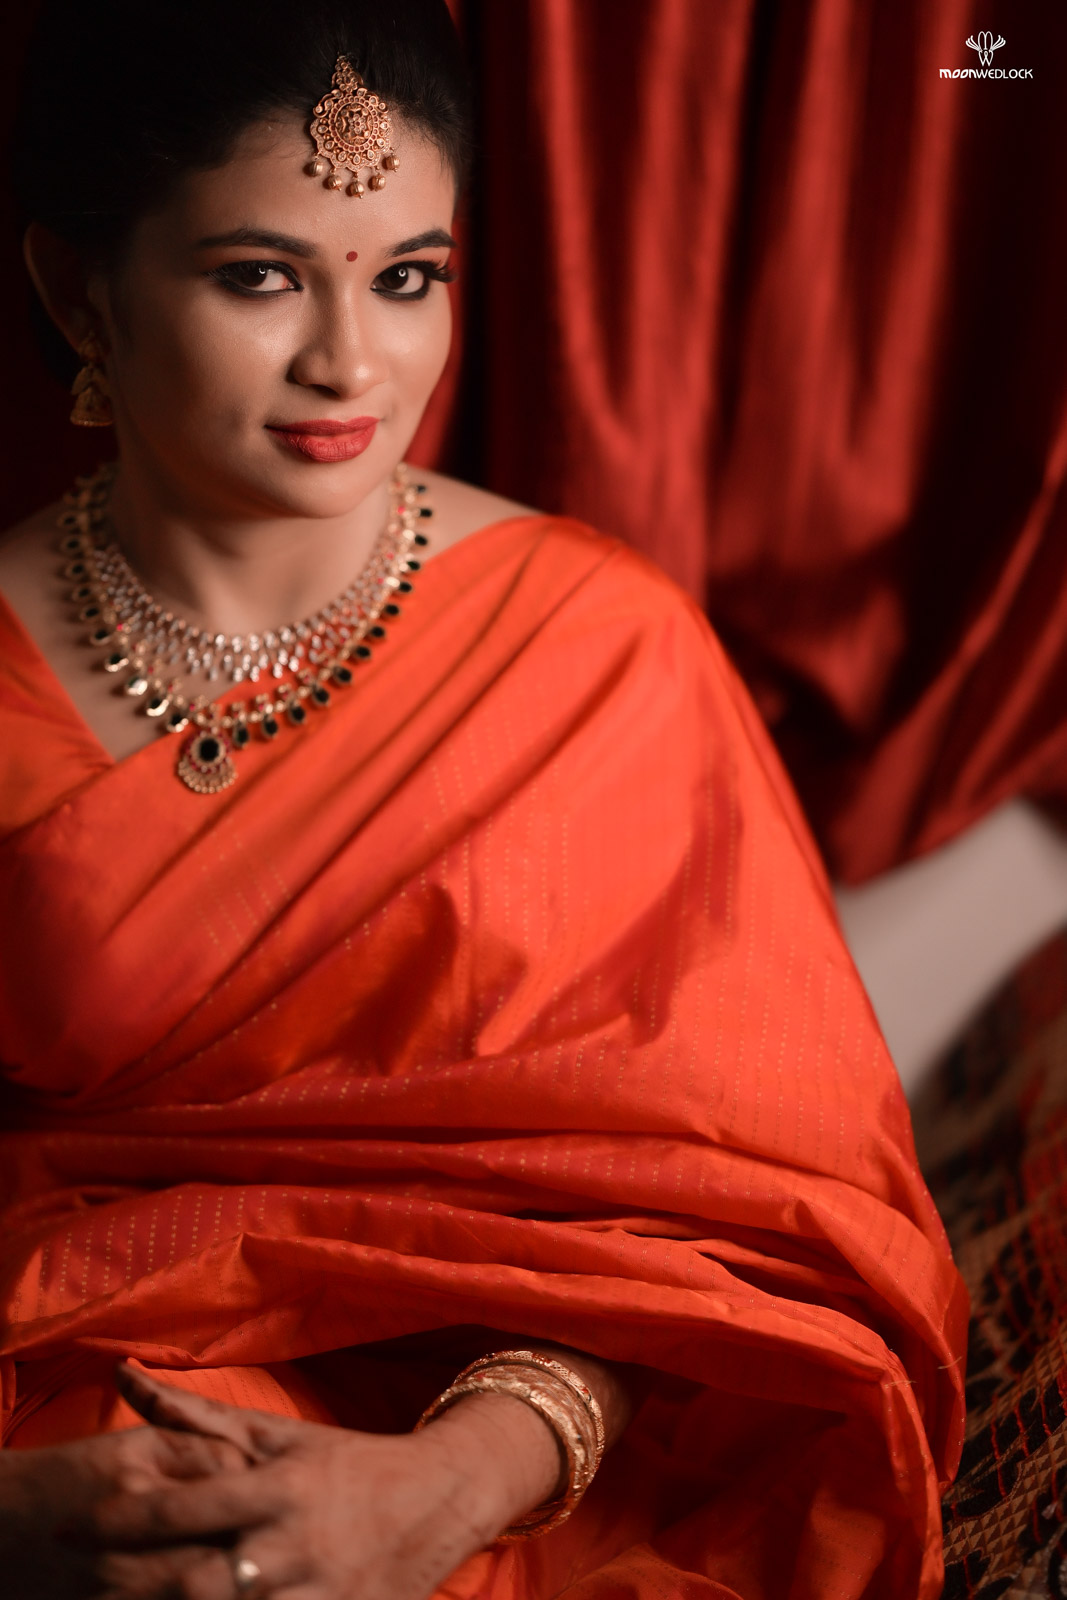 kannada-wedding-photographers-in-bangalore-moonwedlock (4)